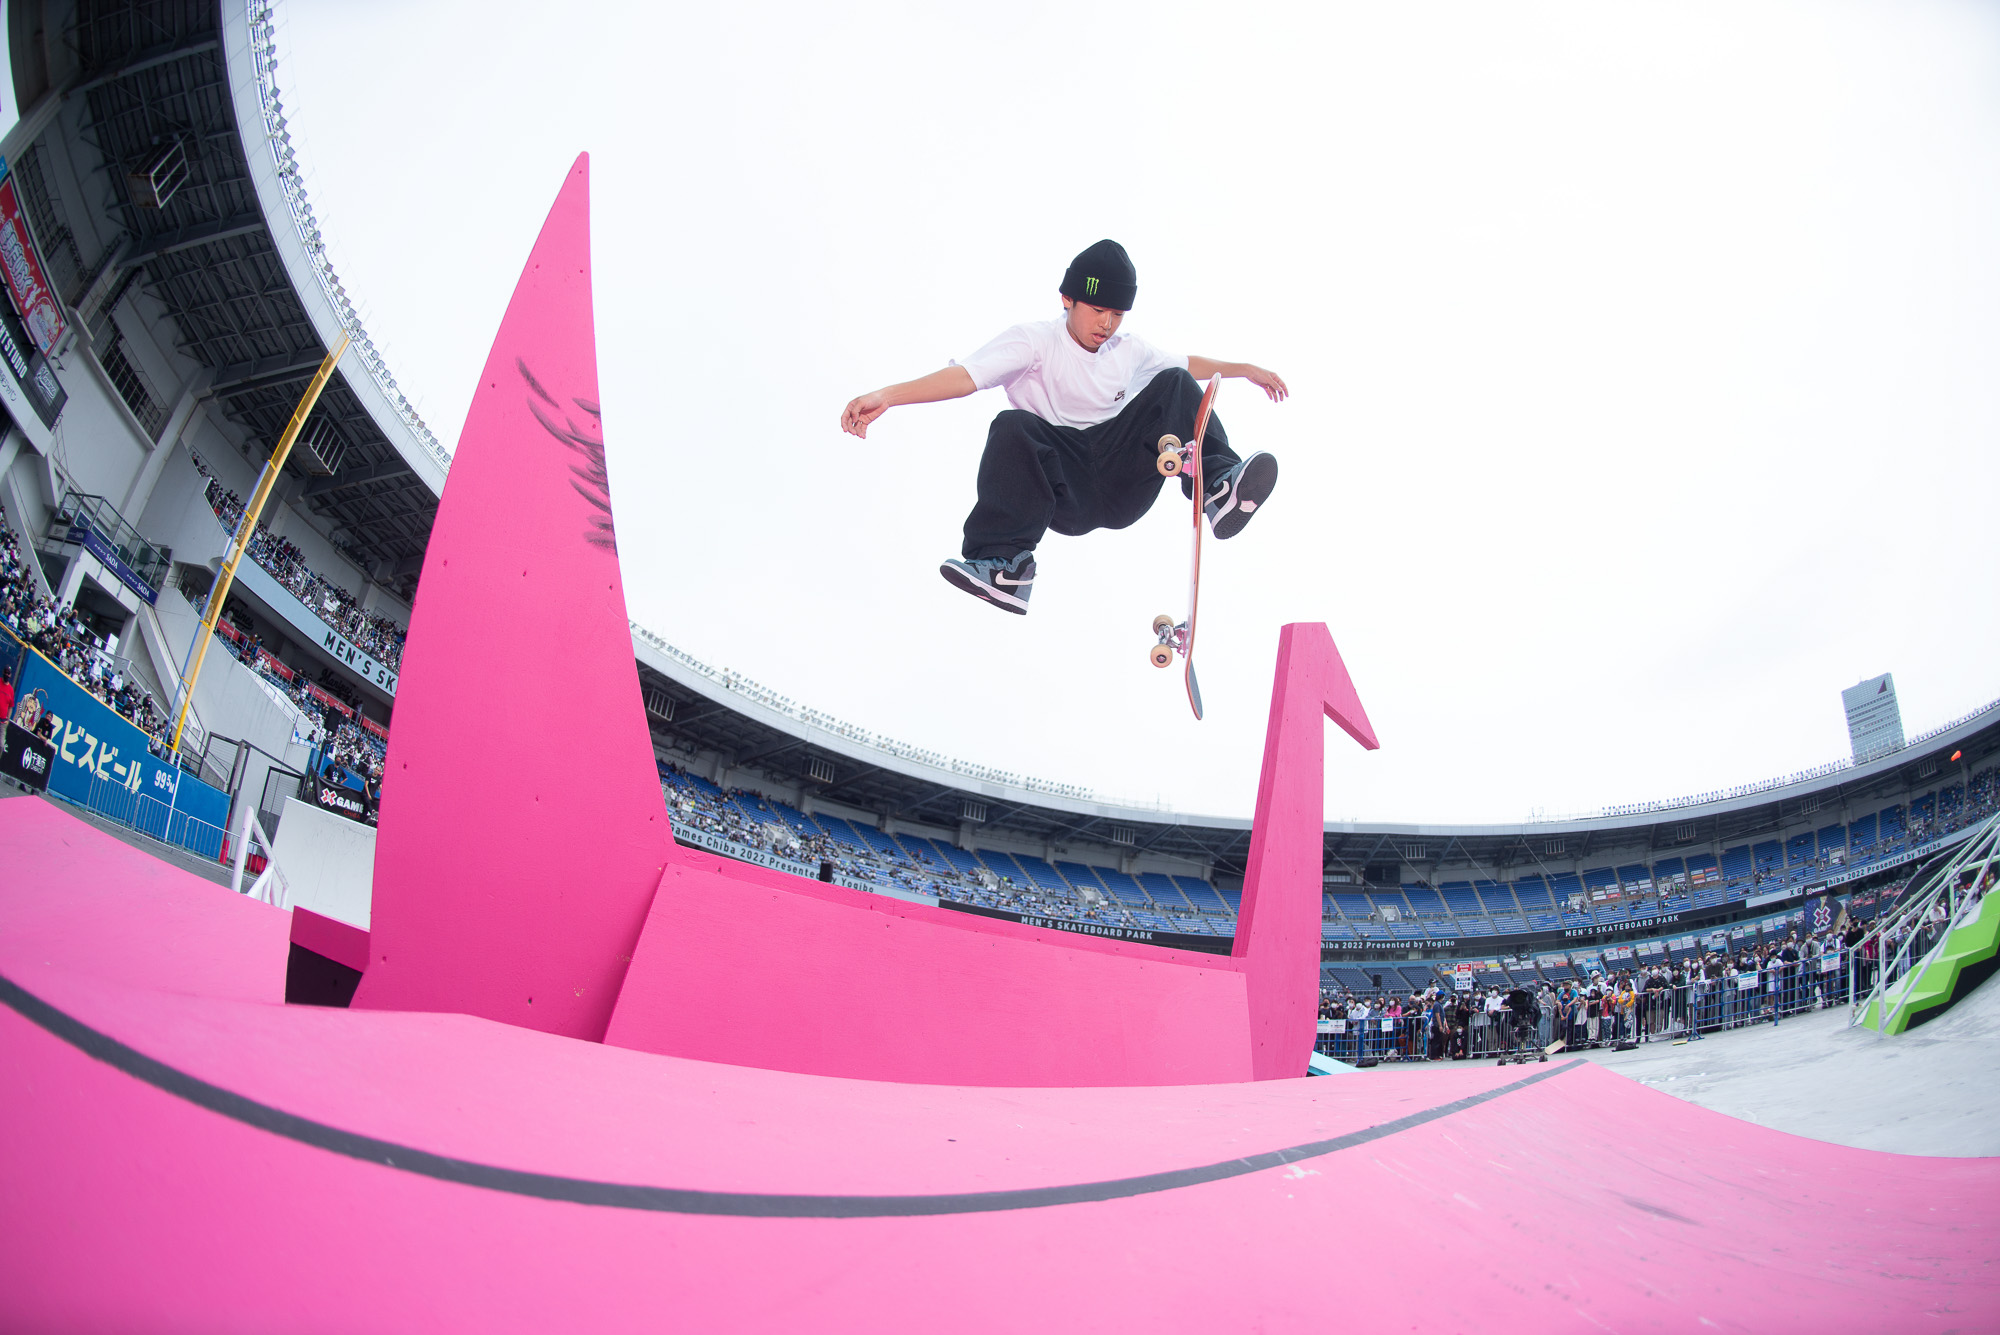 Monster Energy's Daiki Ikeda Claims Silver in Men's Skateboard Street at X Games Chiba 2022